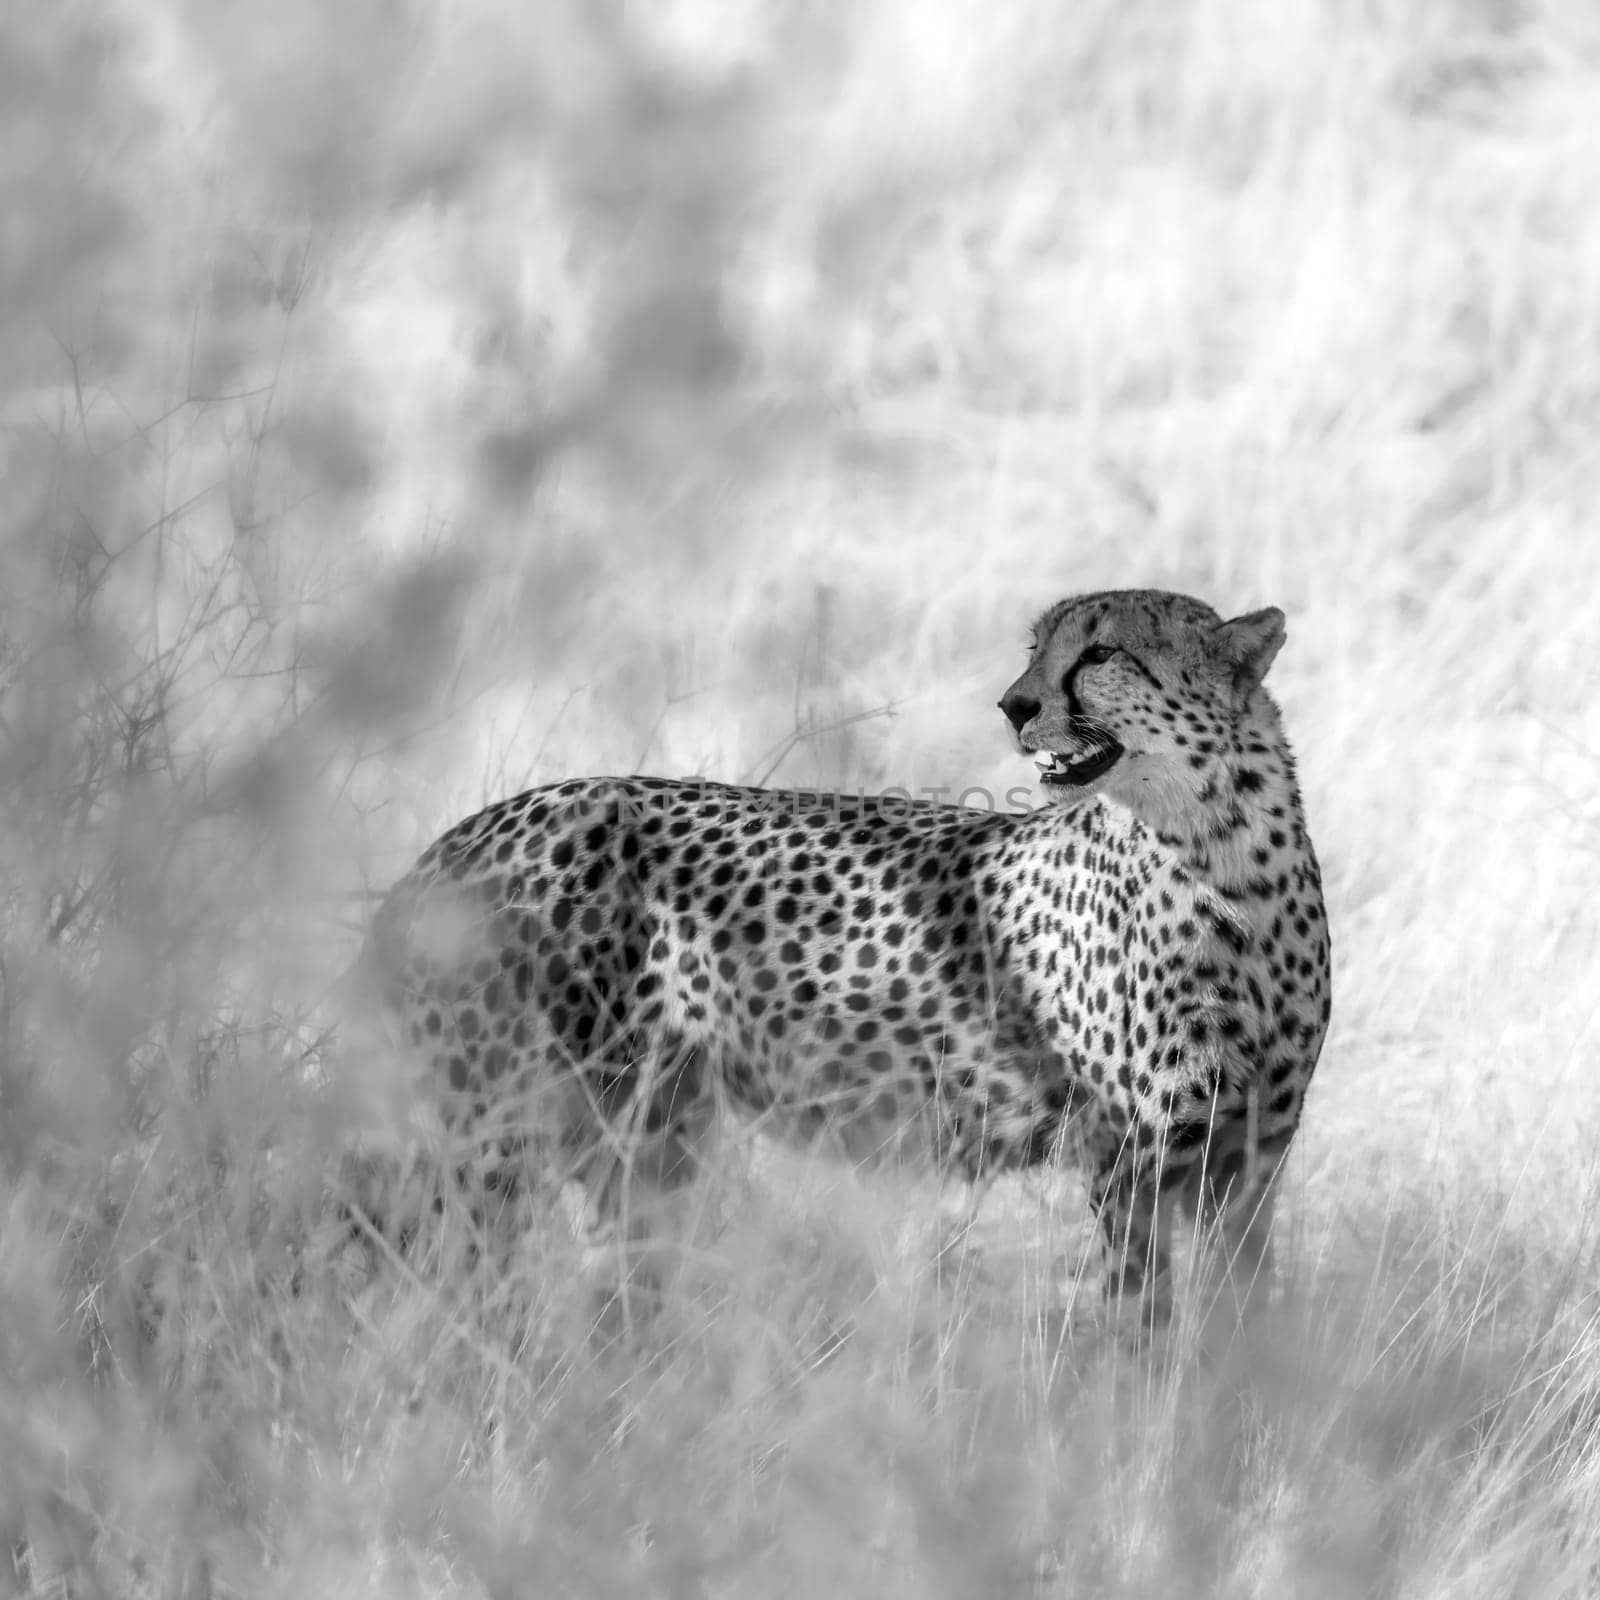 Cheetah roaring in dry savannah in Kgalagadi transfrontier park, South Africa ; Specie Acinonyx jubatus family of Felidae